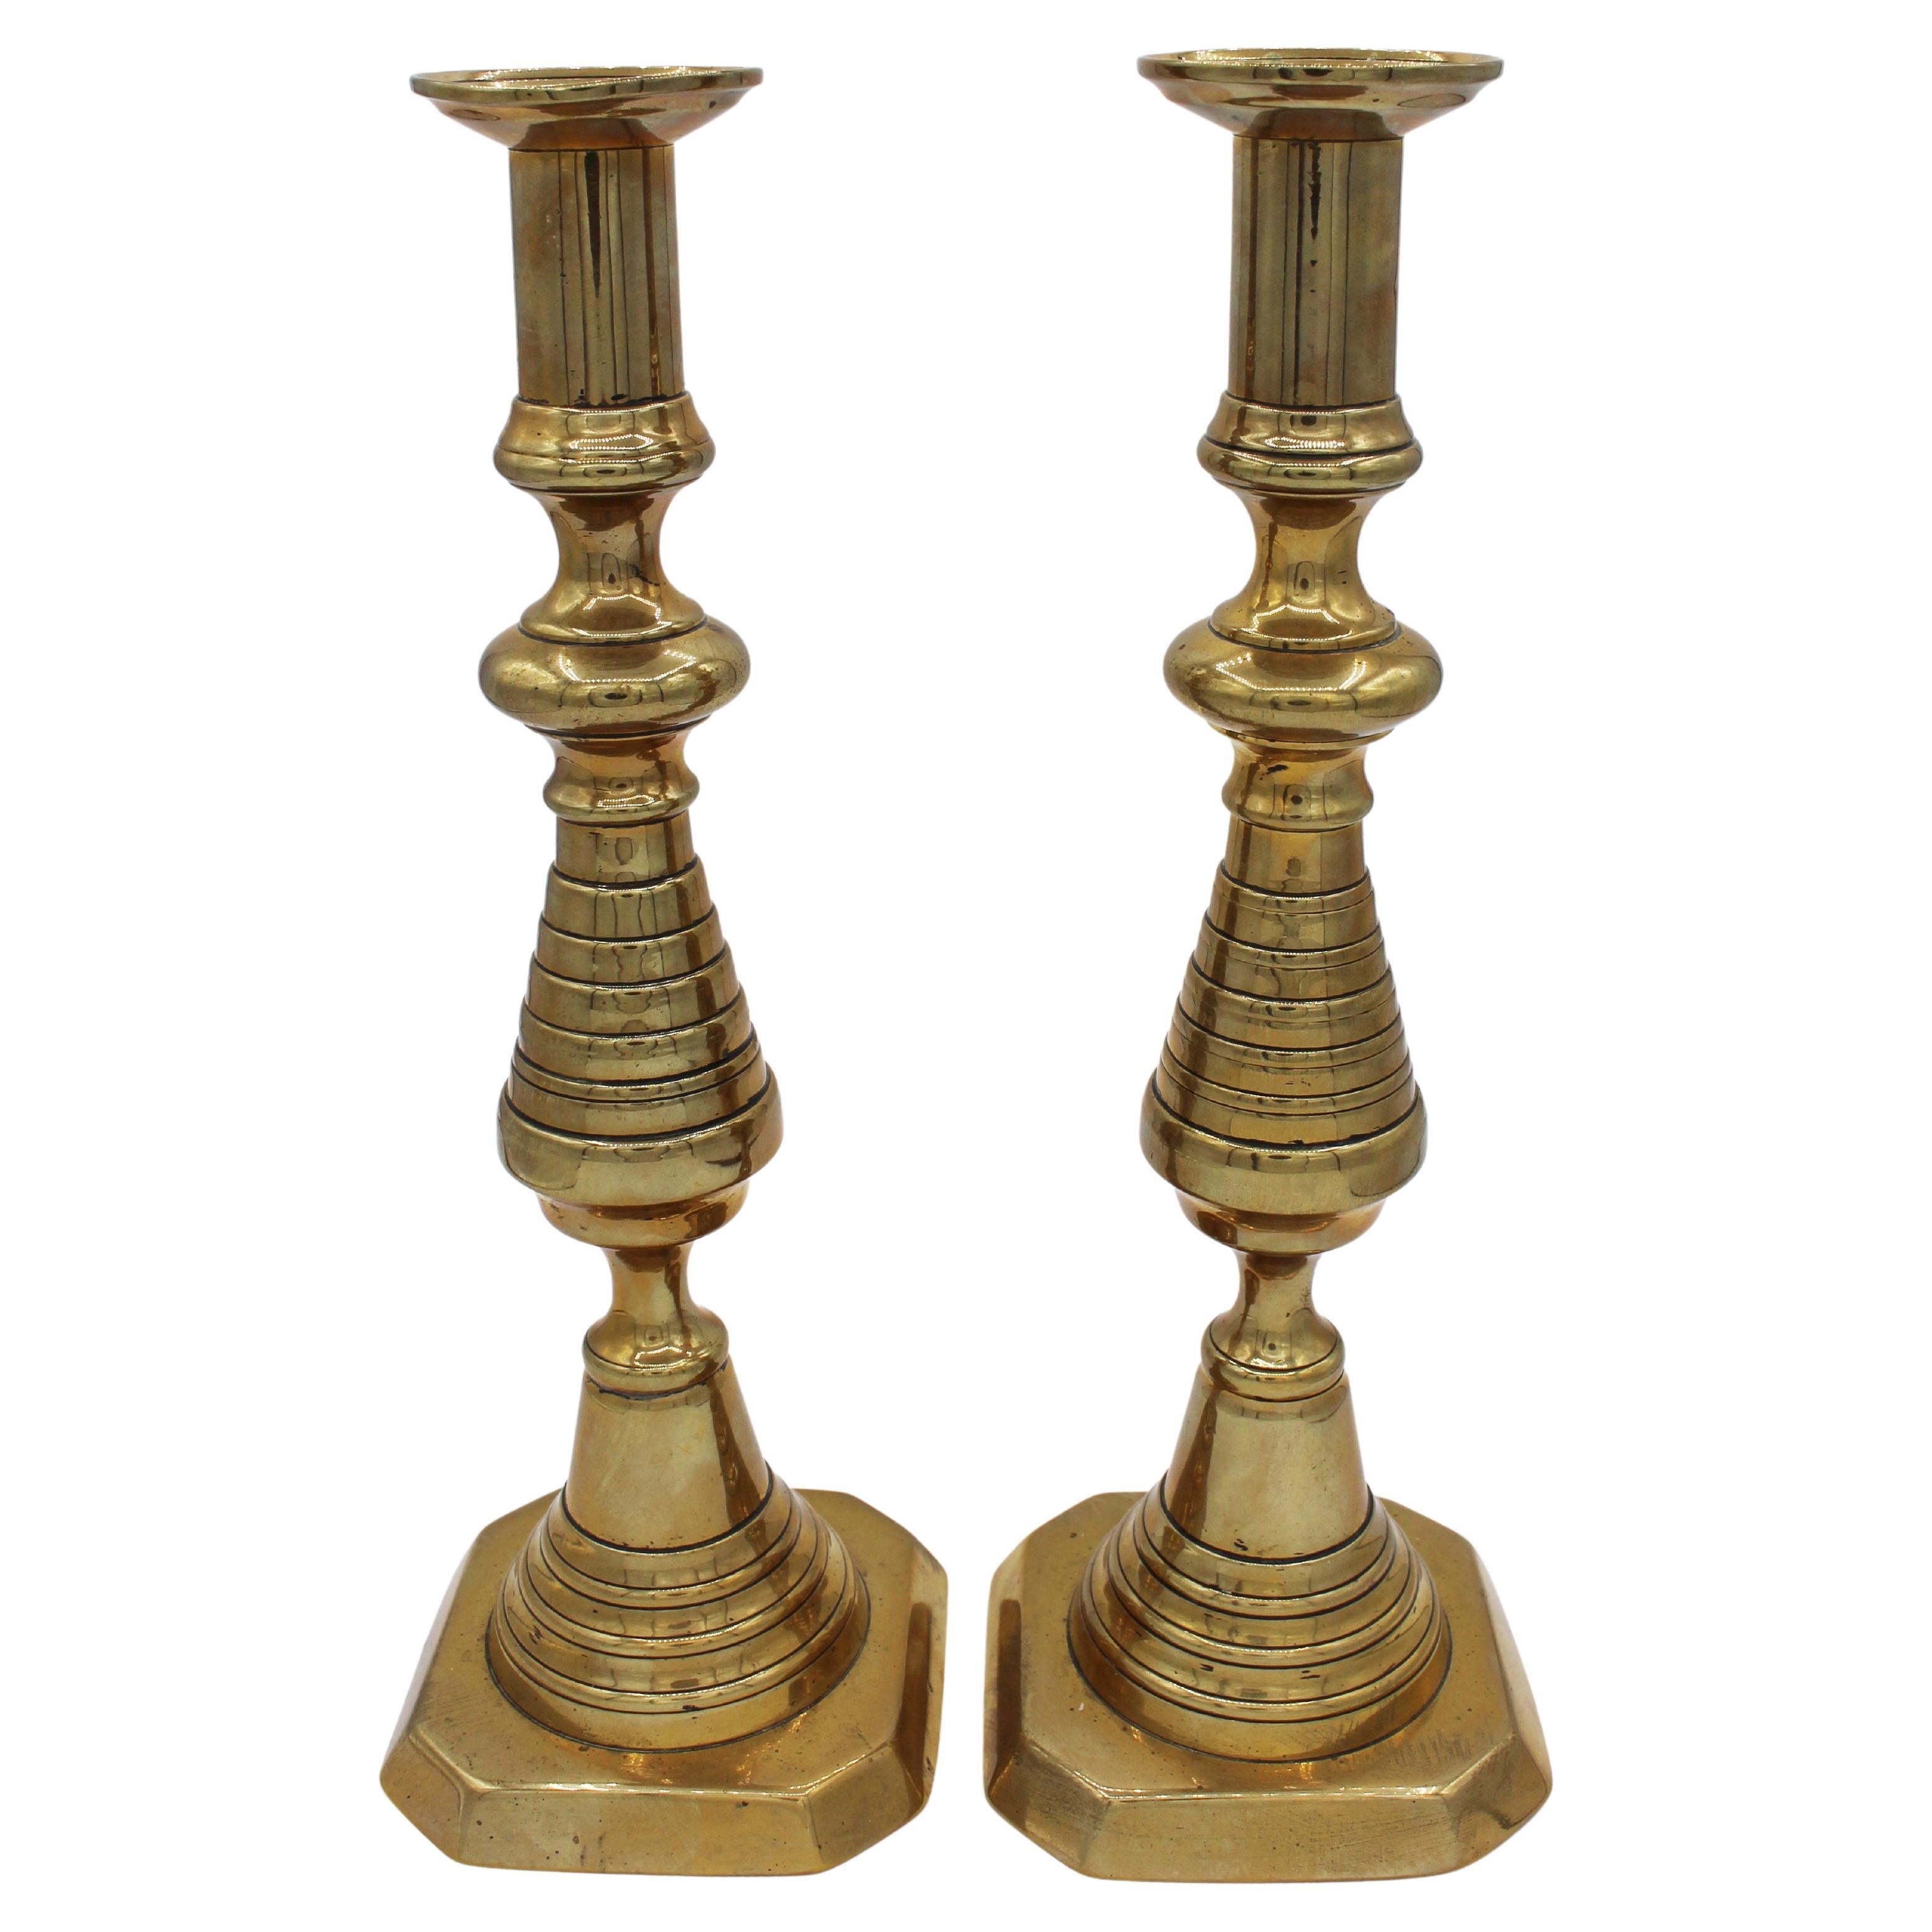 Circa 1860 English Brass Candlesticks, a Pair For Sale